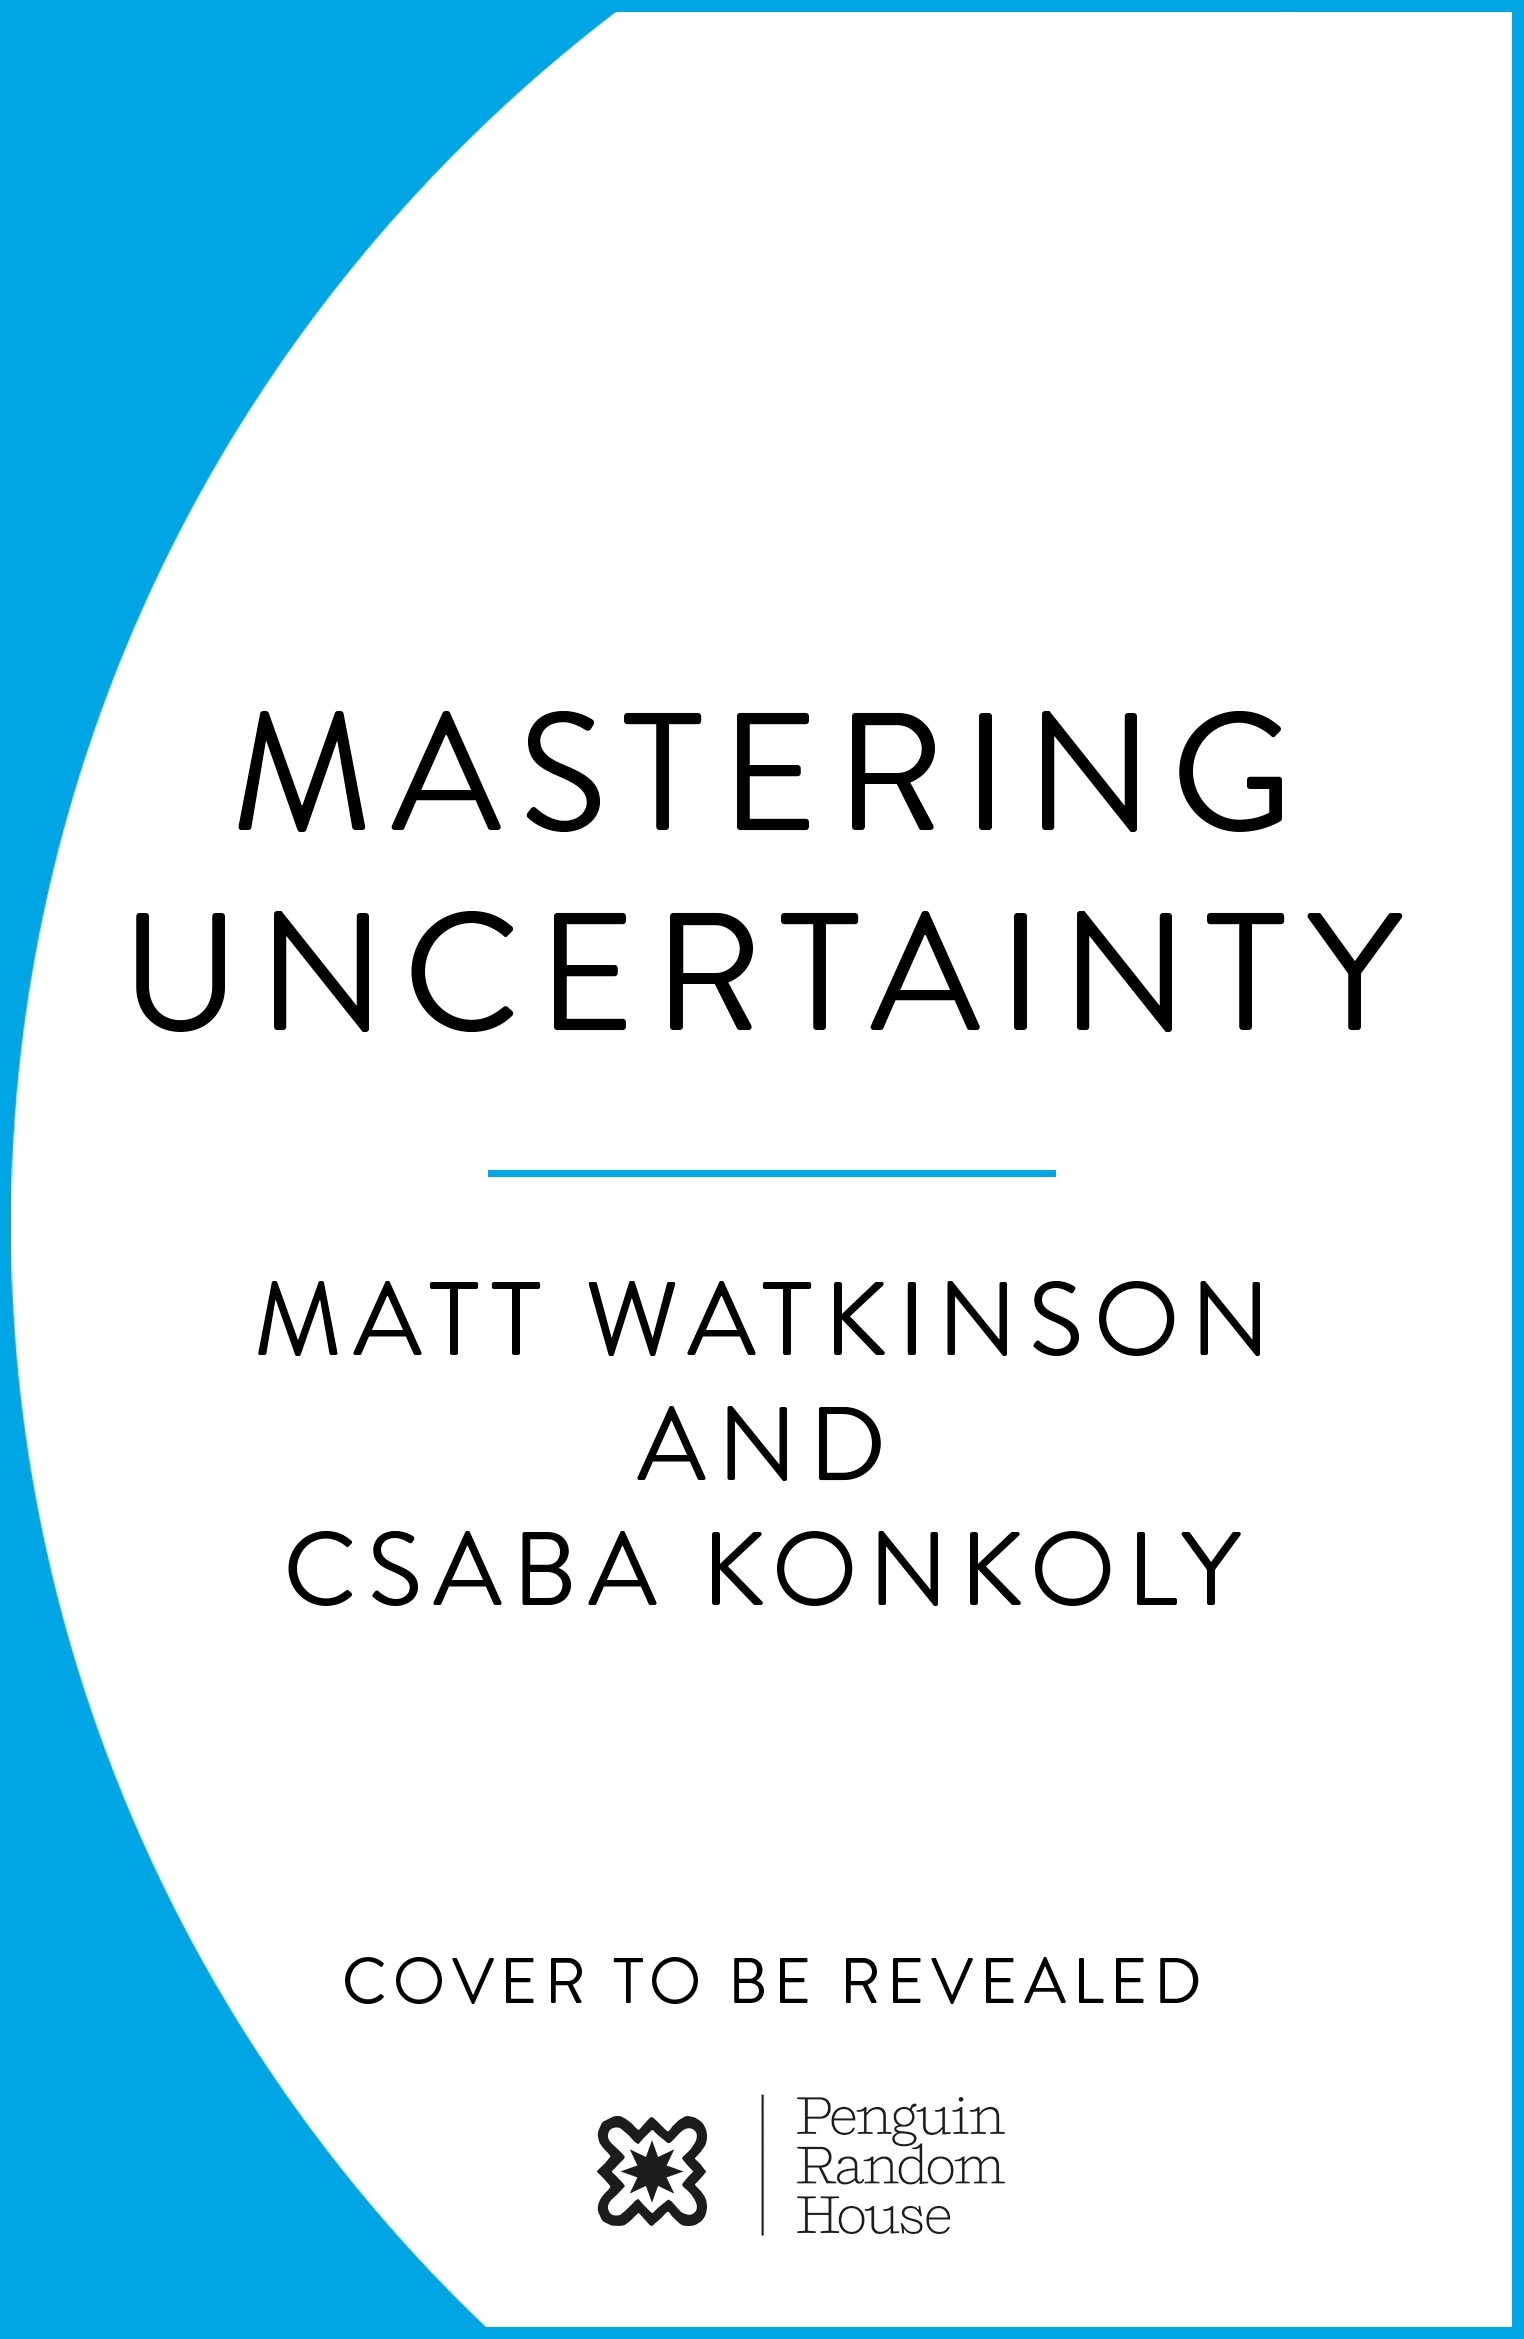 Book “Mastering Uncertainty” by Matt Watkinson, Csaba Konkoly — July 14, 2022